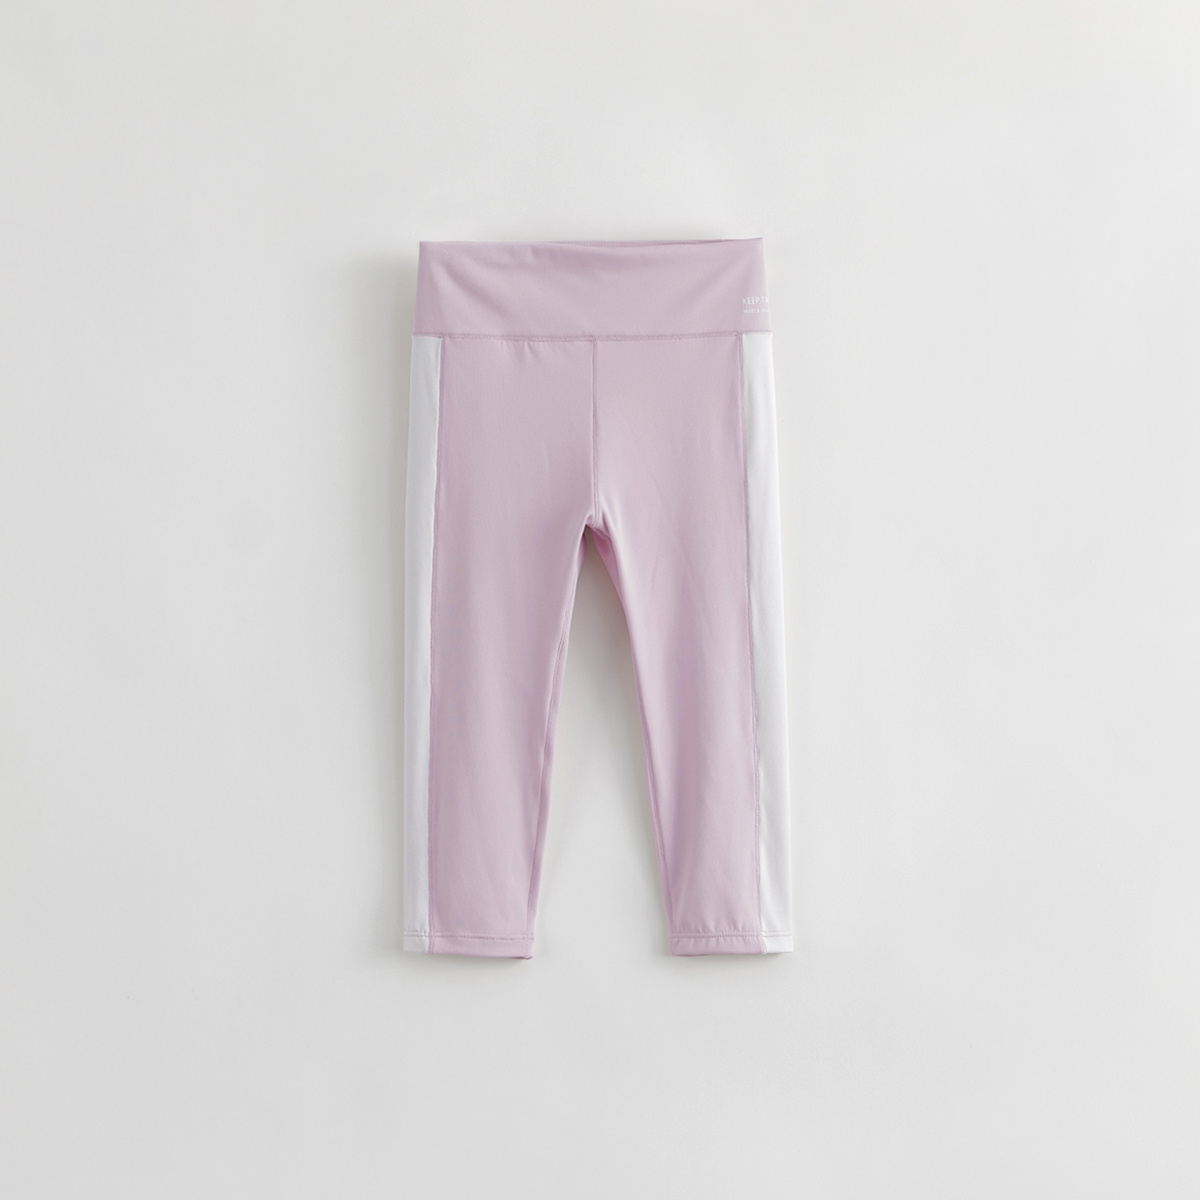 Girls Base Layer Yoga Pants, Soft Comfortable Leggings For Kids Children